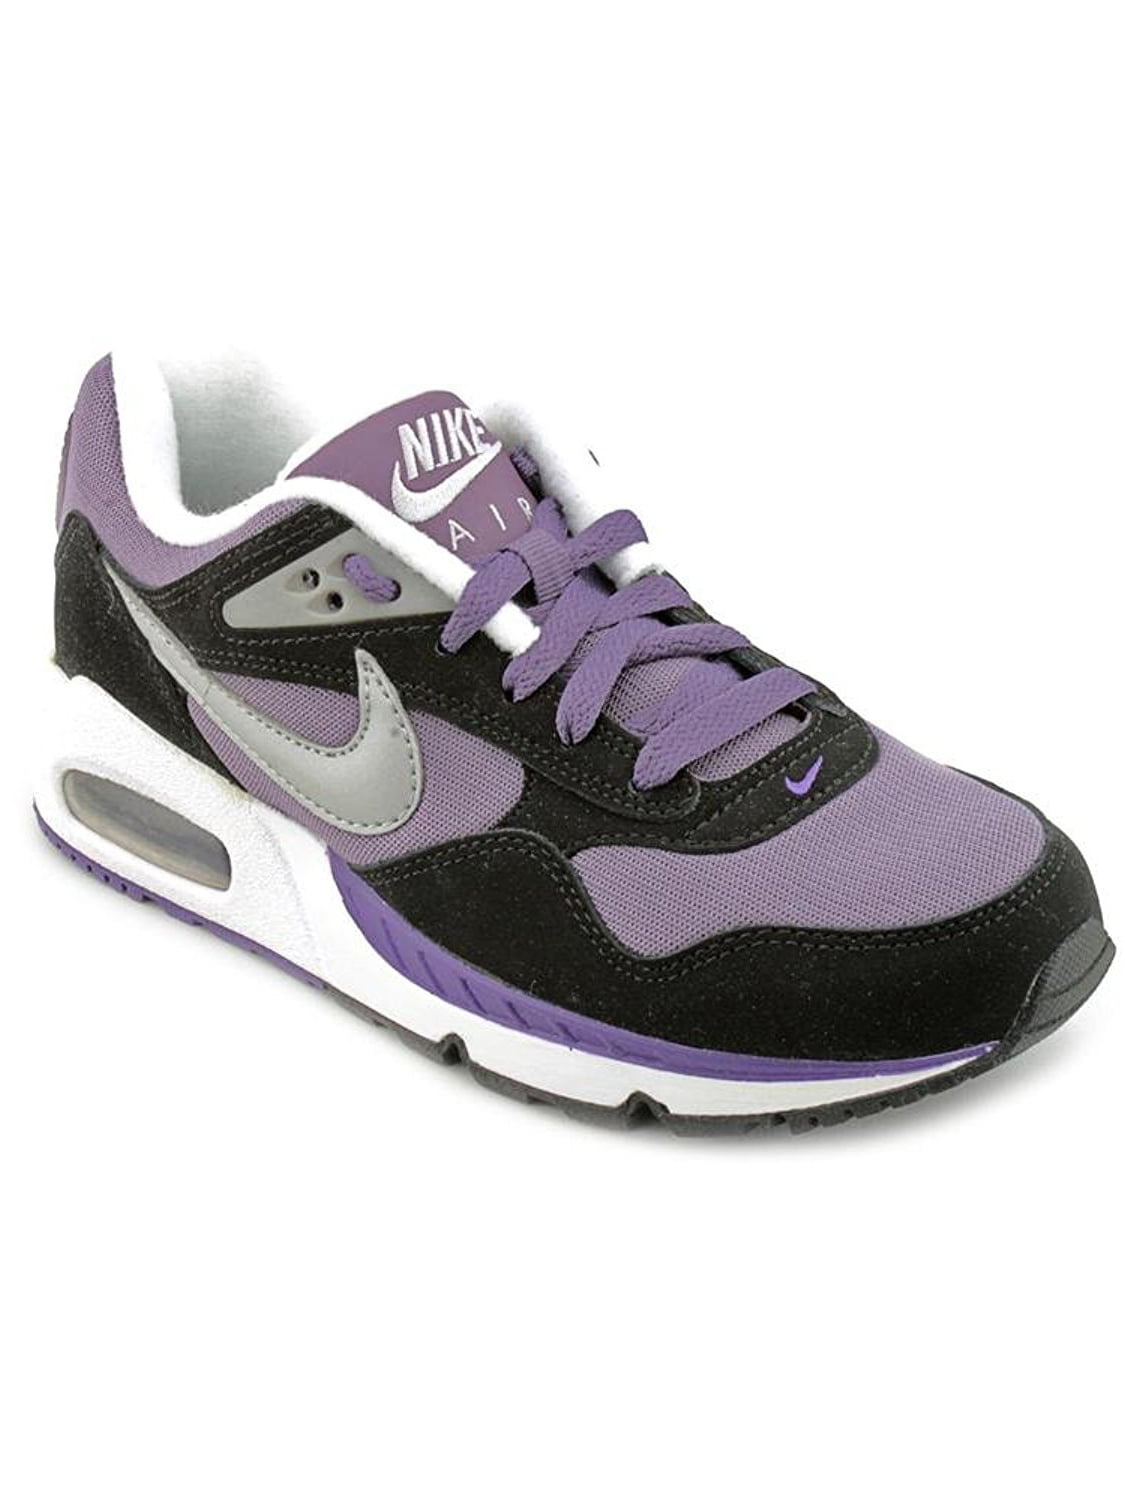 nike women's air max purple